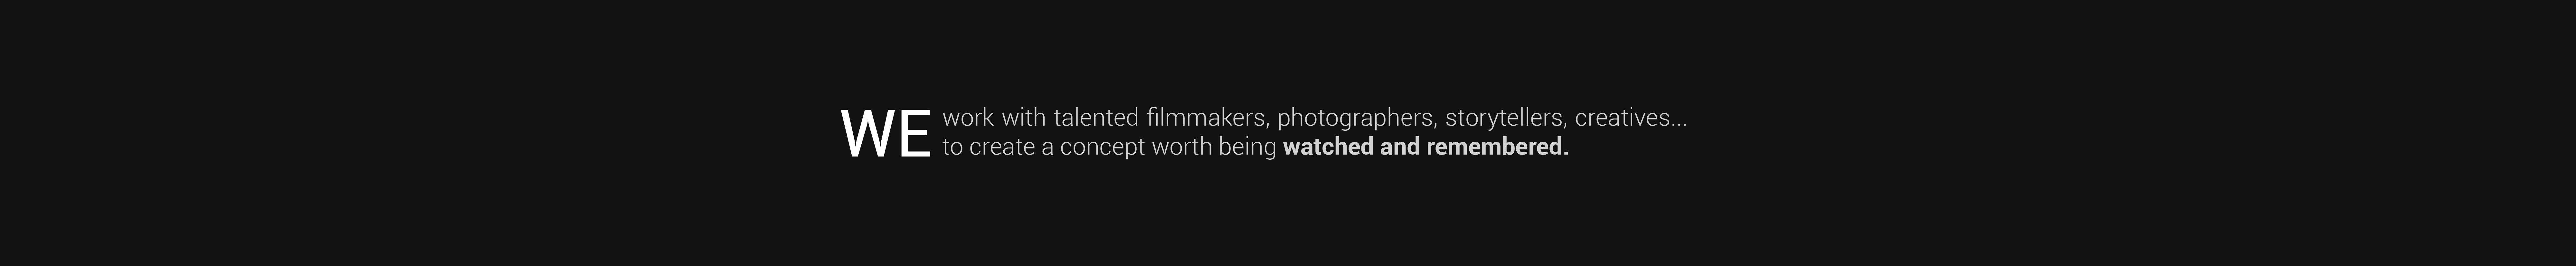 Header_Filmmakers